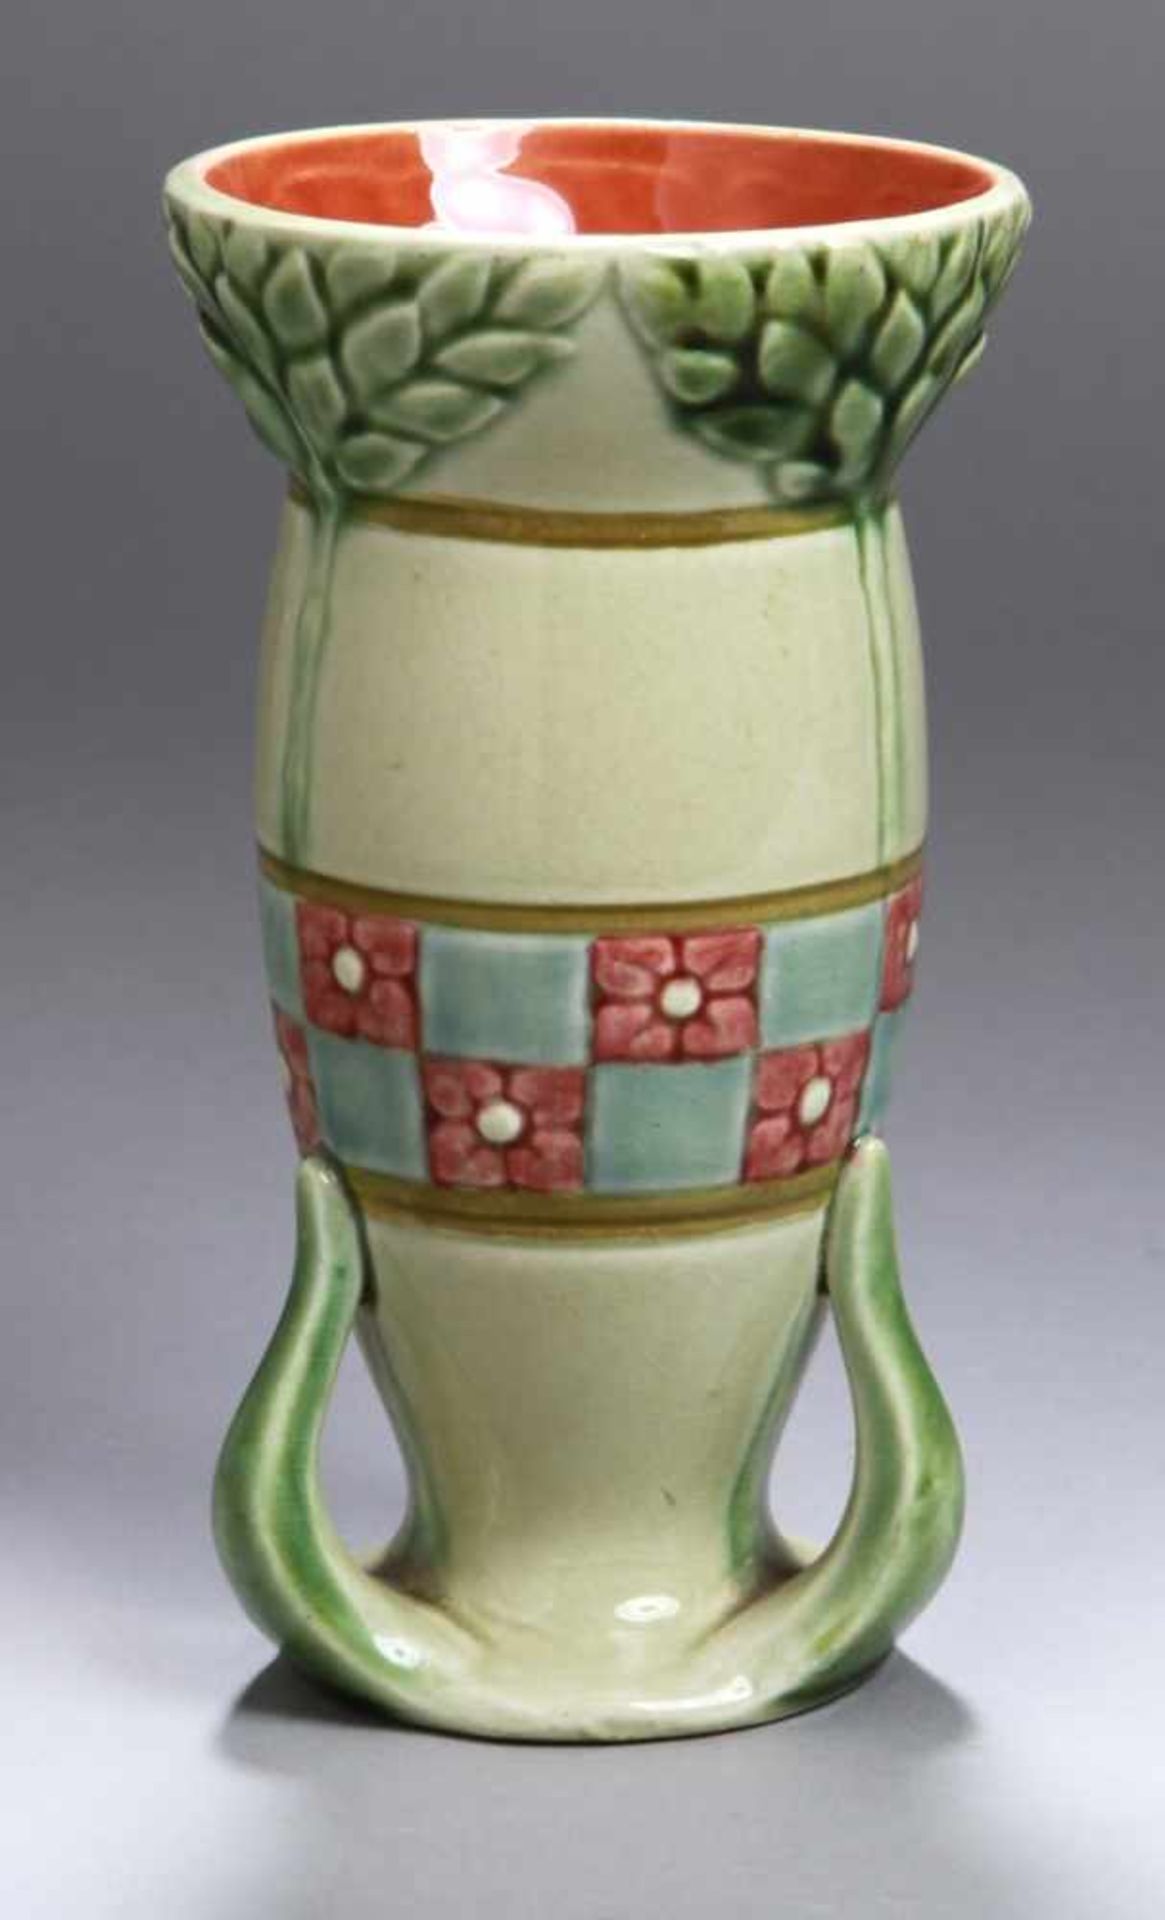 Jugendstil Keramik-Ziervase, Utzschneider & Cie, Sarreguemines, Mod.nr.: 3707, vegetabileForm,